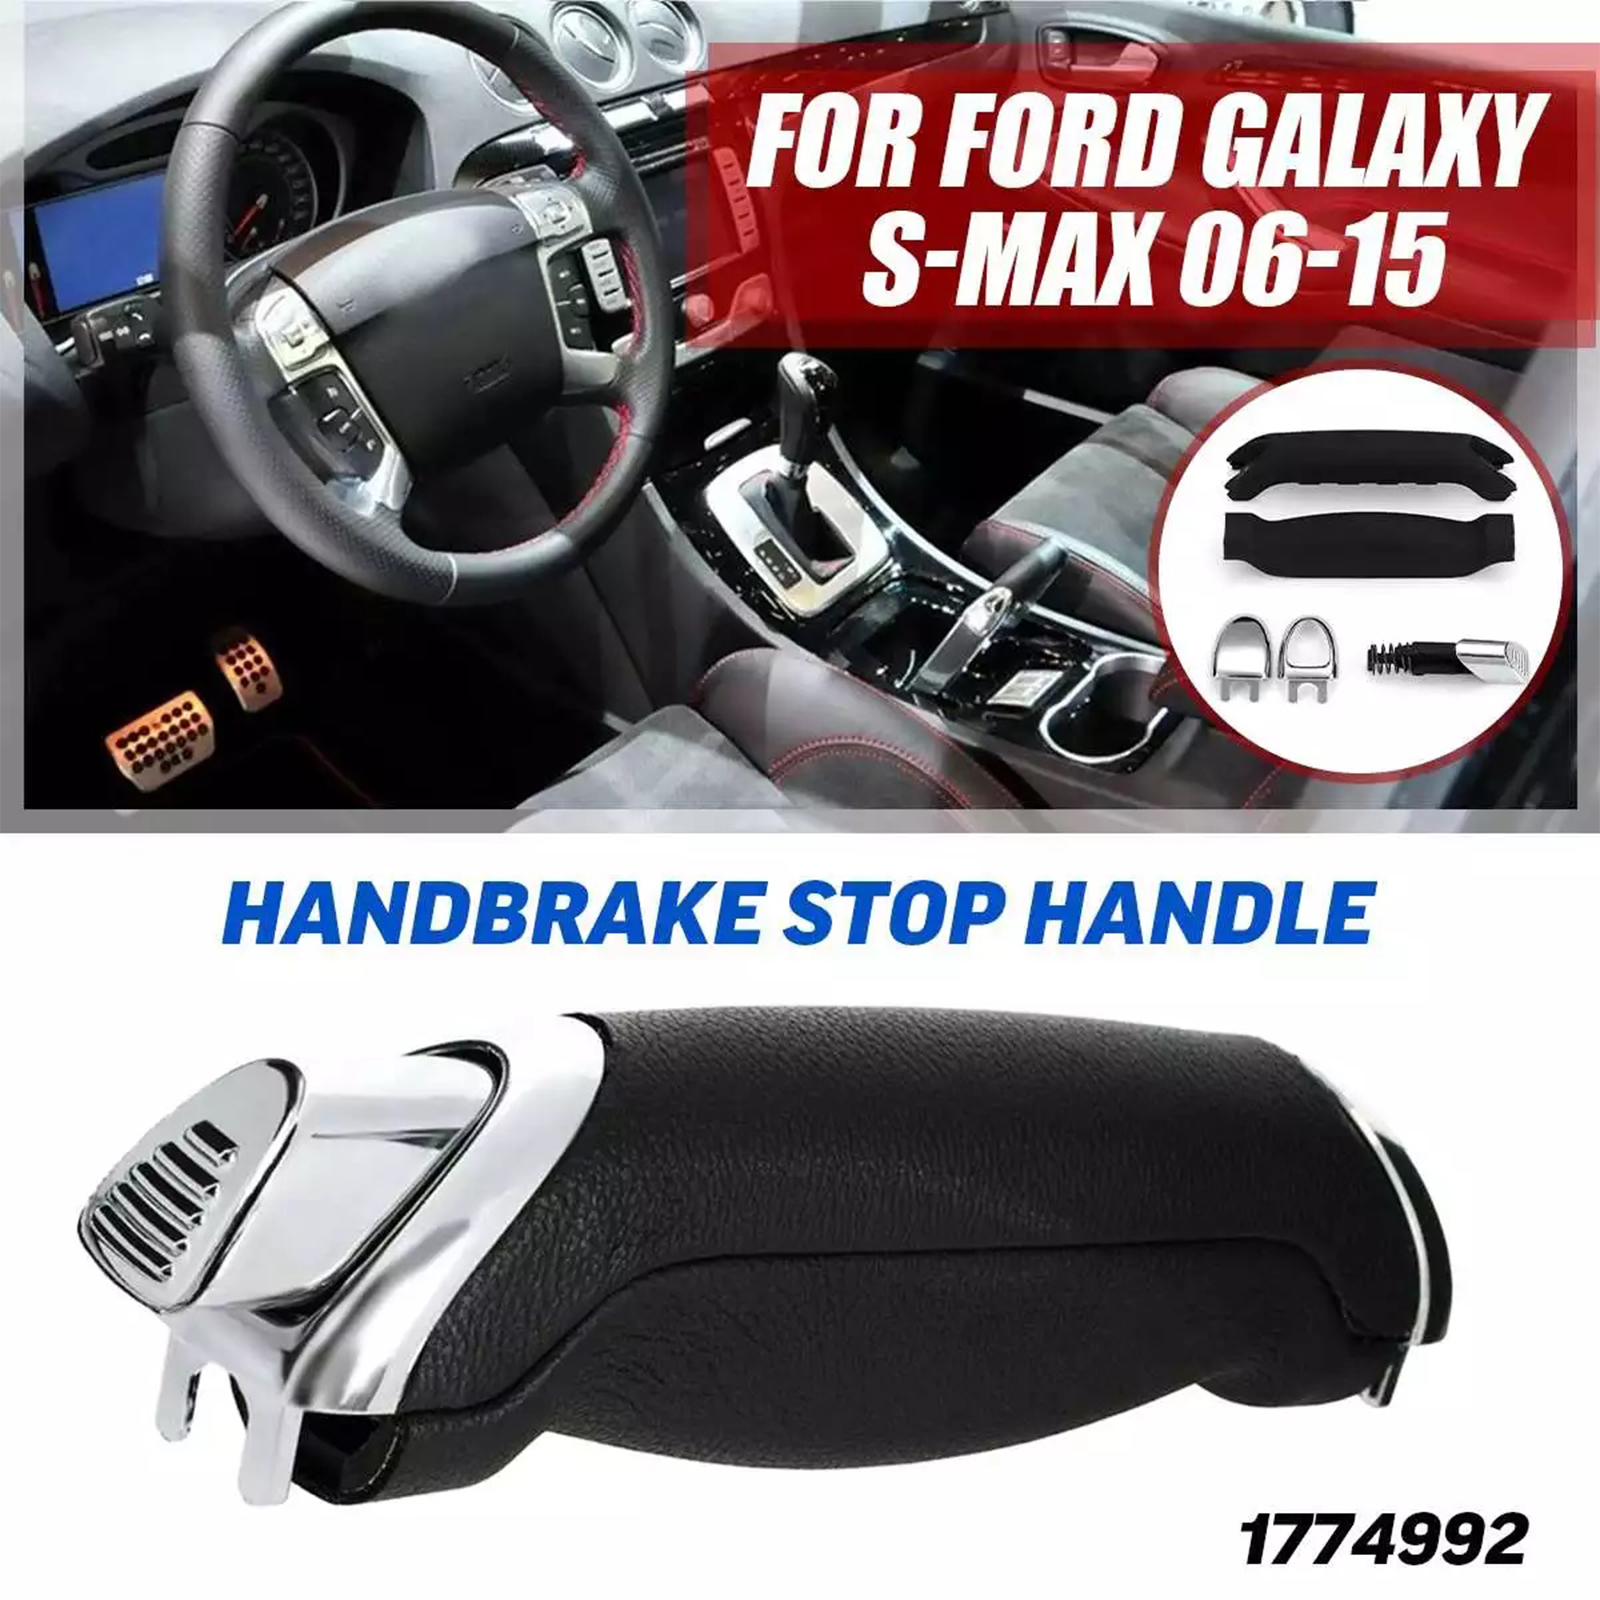 Hand Brake Stop Handbrake Repair For Ford Galaxy S-Max 1774992 2006-2015 UK